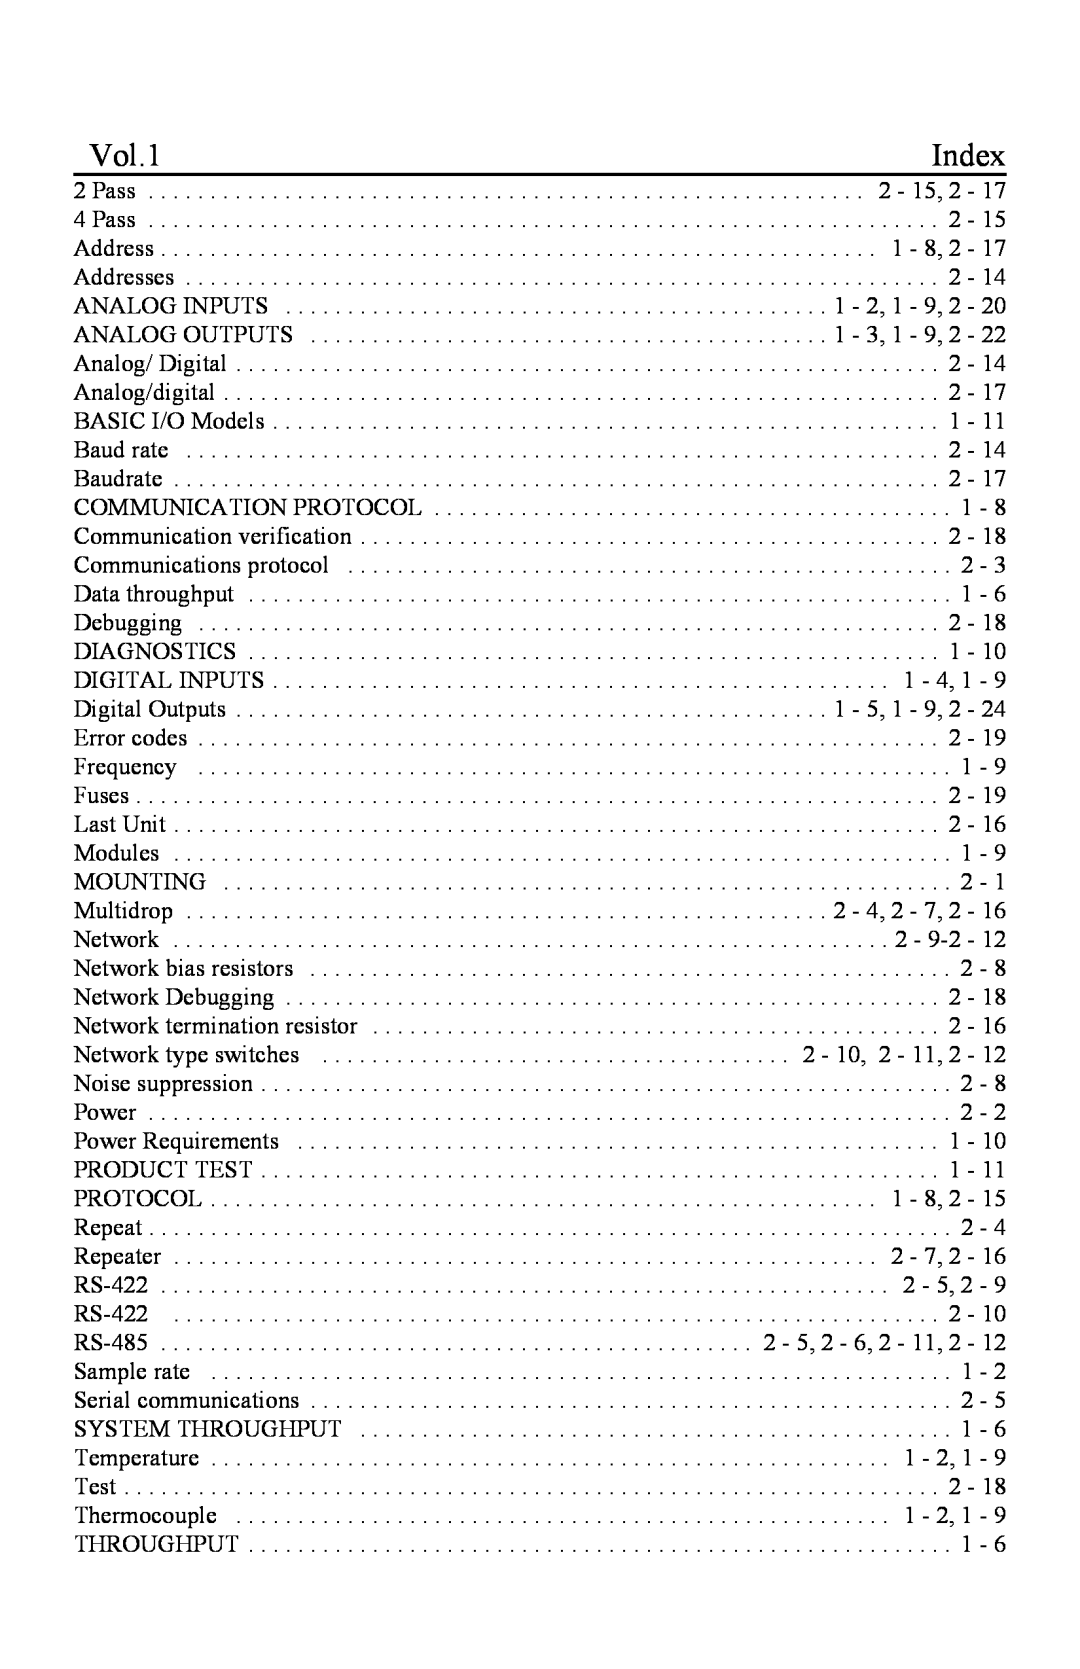 I-O Display Systems Basic I/O Product manual Index, Vol.1, Communication Protocol 